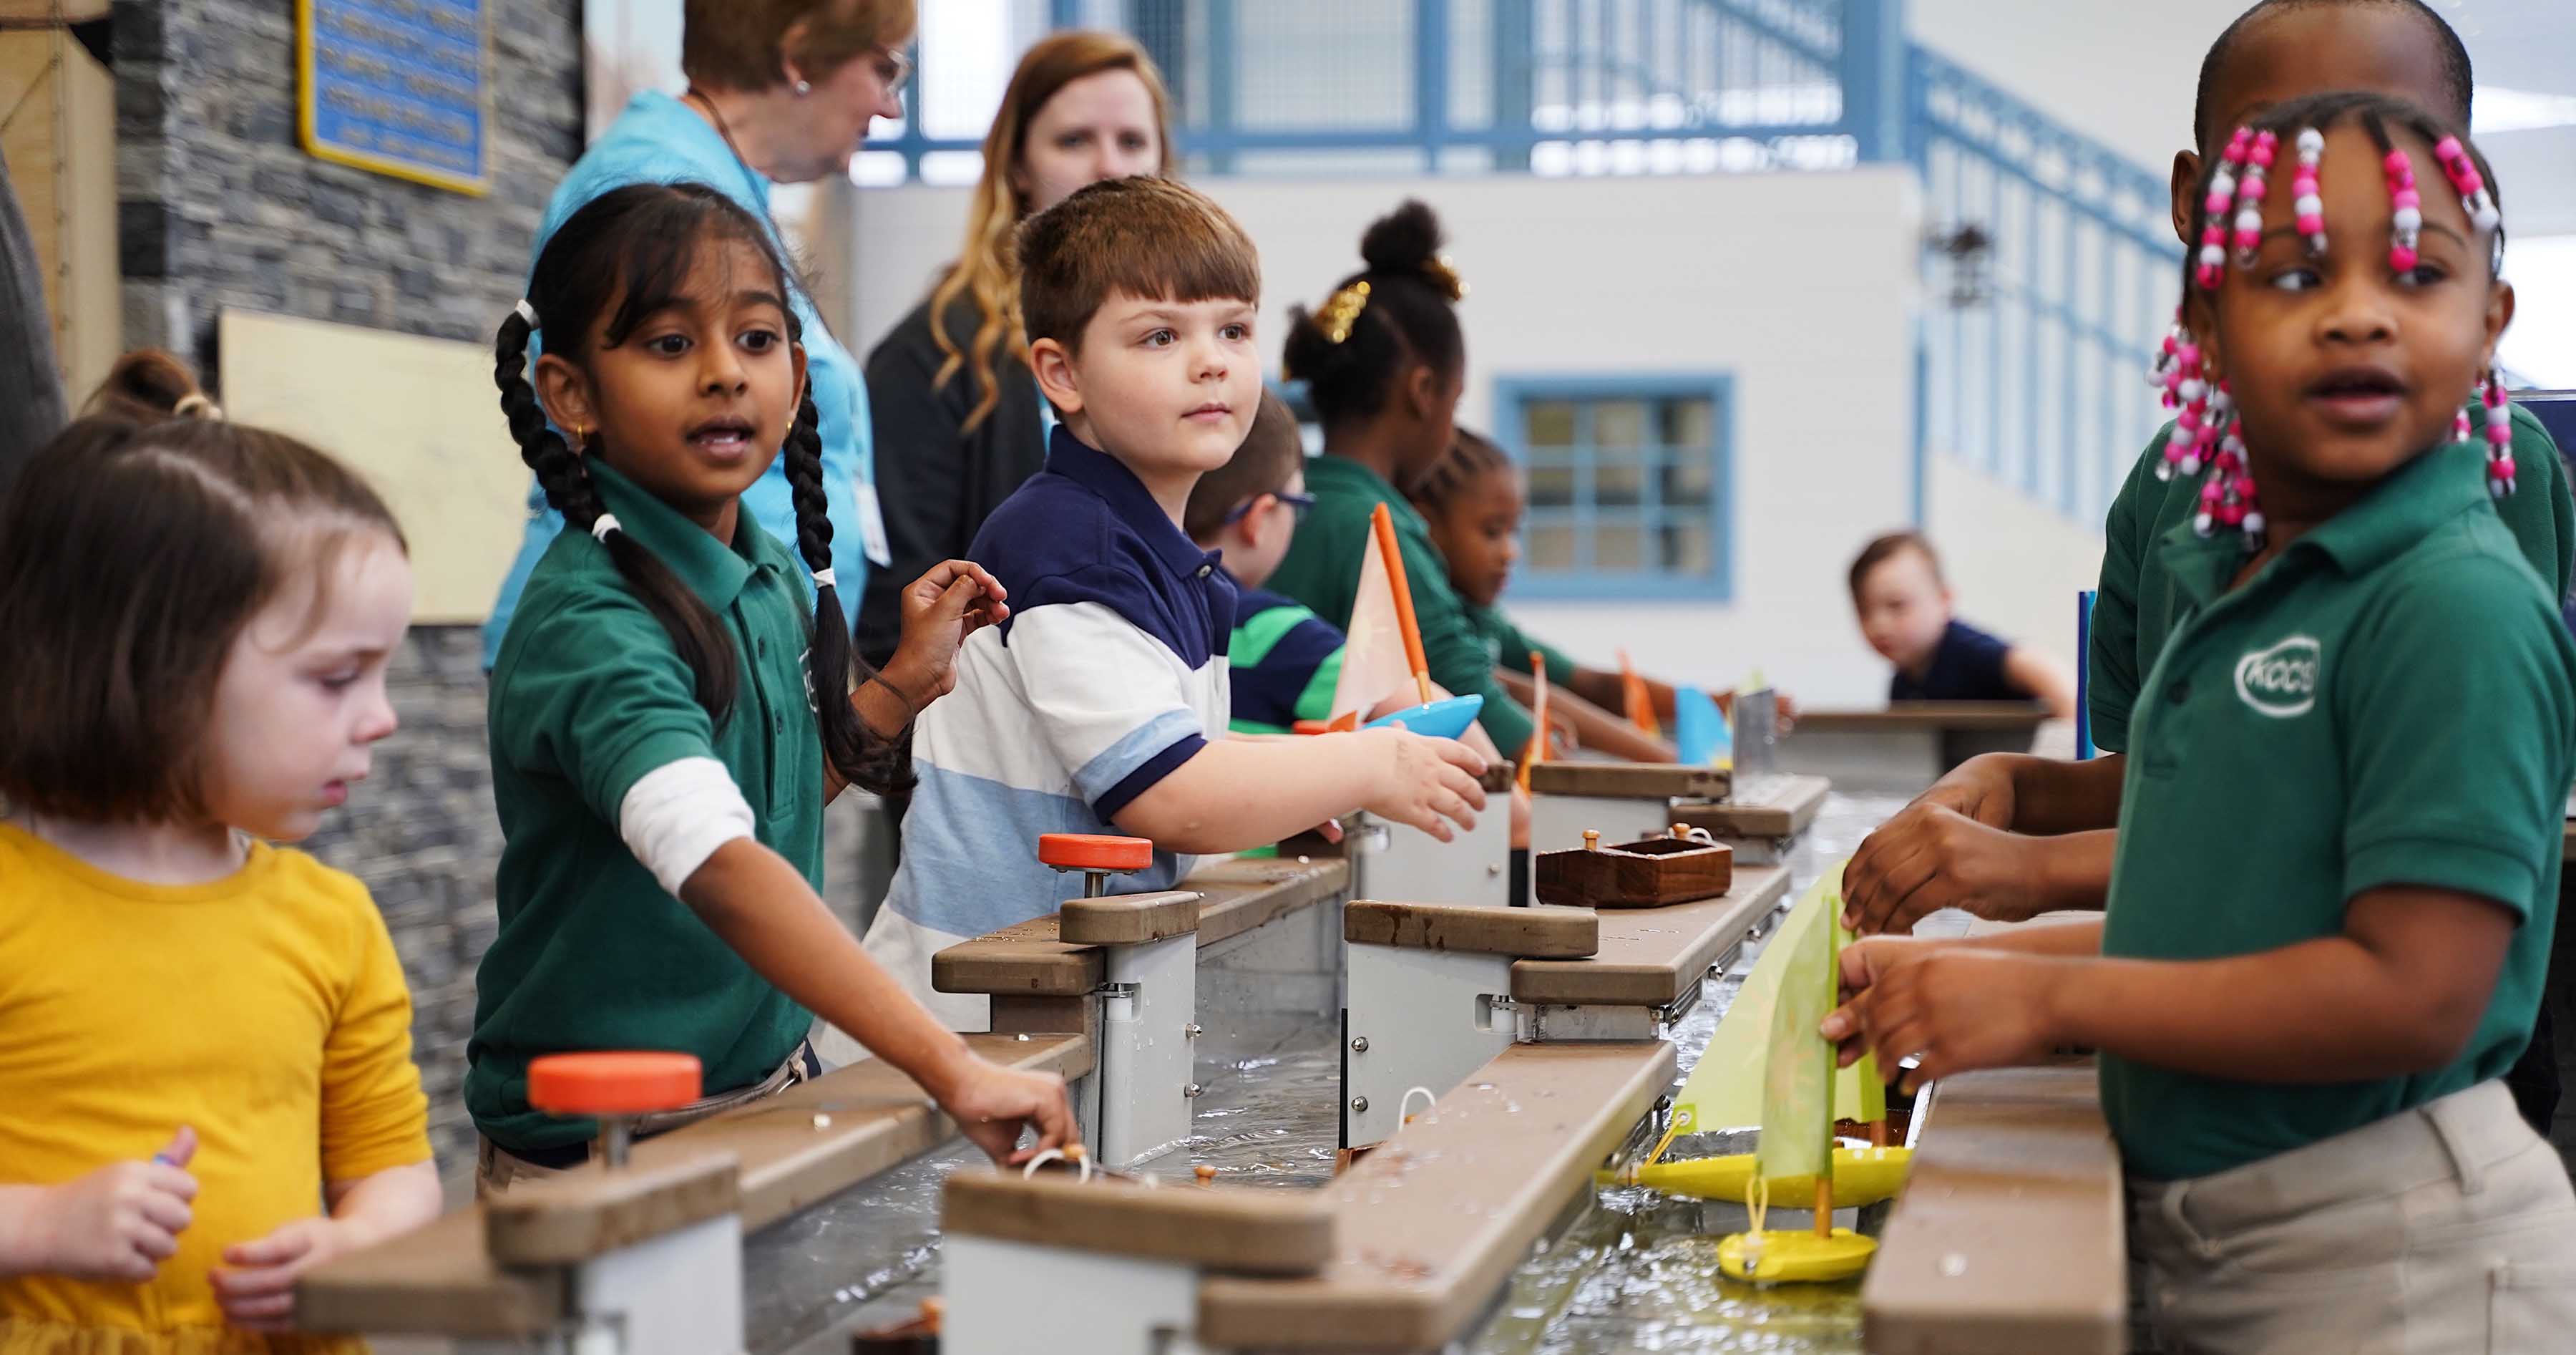 Explore & Children making boats at More Children's Museum